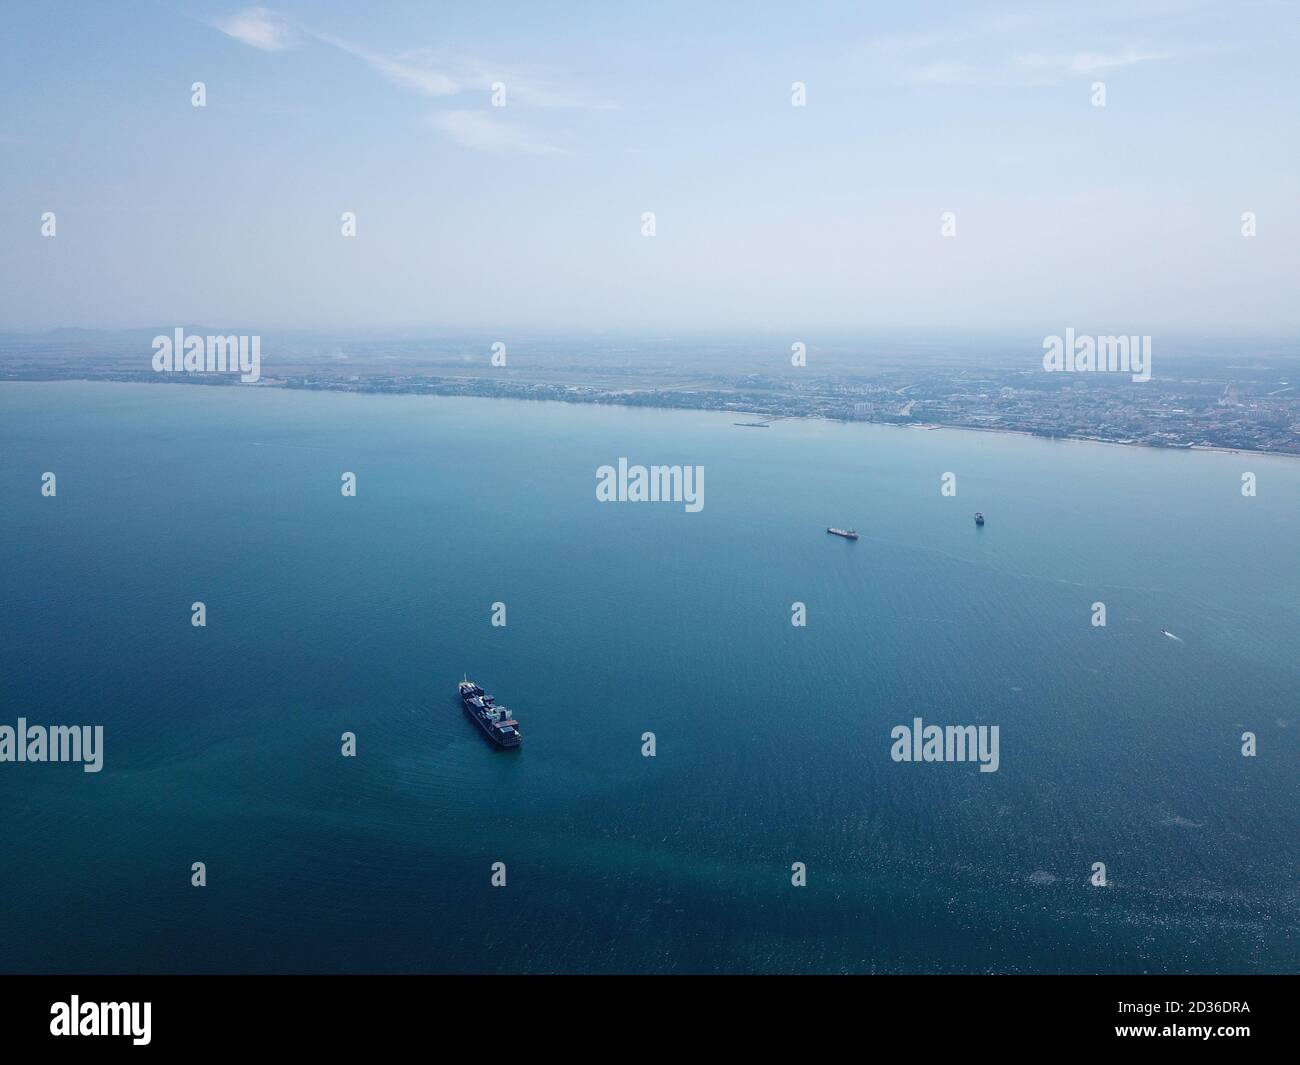 Georgetown, Penang/Malaysia - Mar 17 2020: A container ship at Penang sea. Back is Peninsular Malaysia. Stock Photo